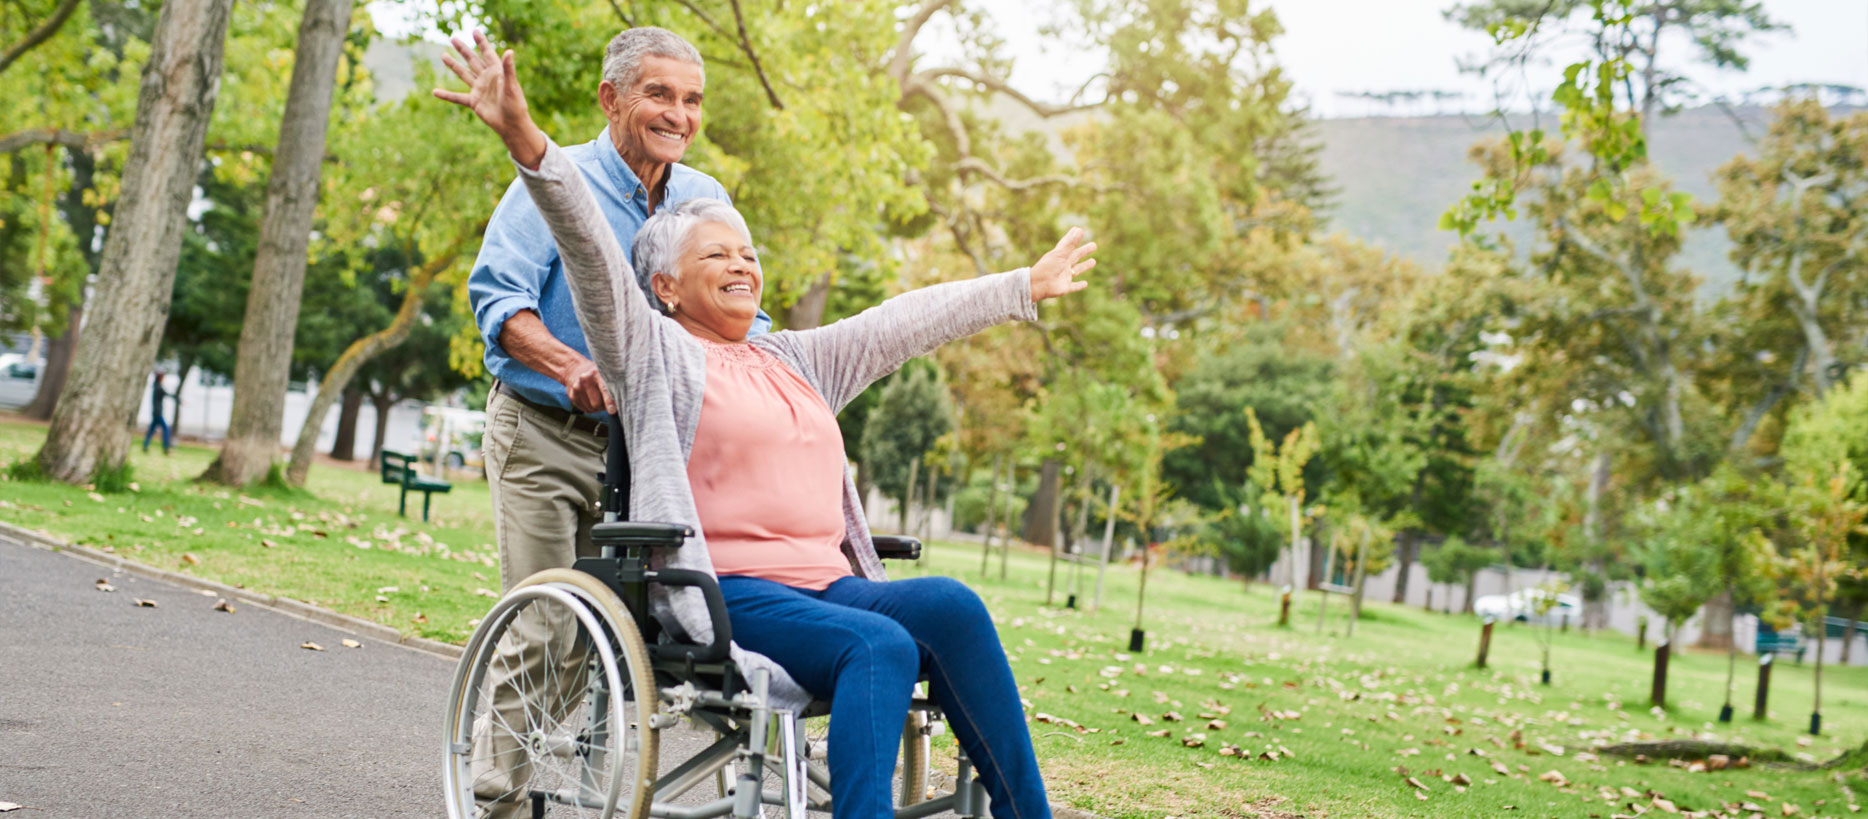 Man pushing a very happy elderly woman in a wheelchair through a park